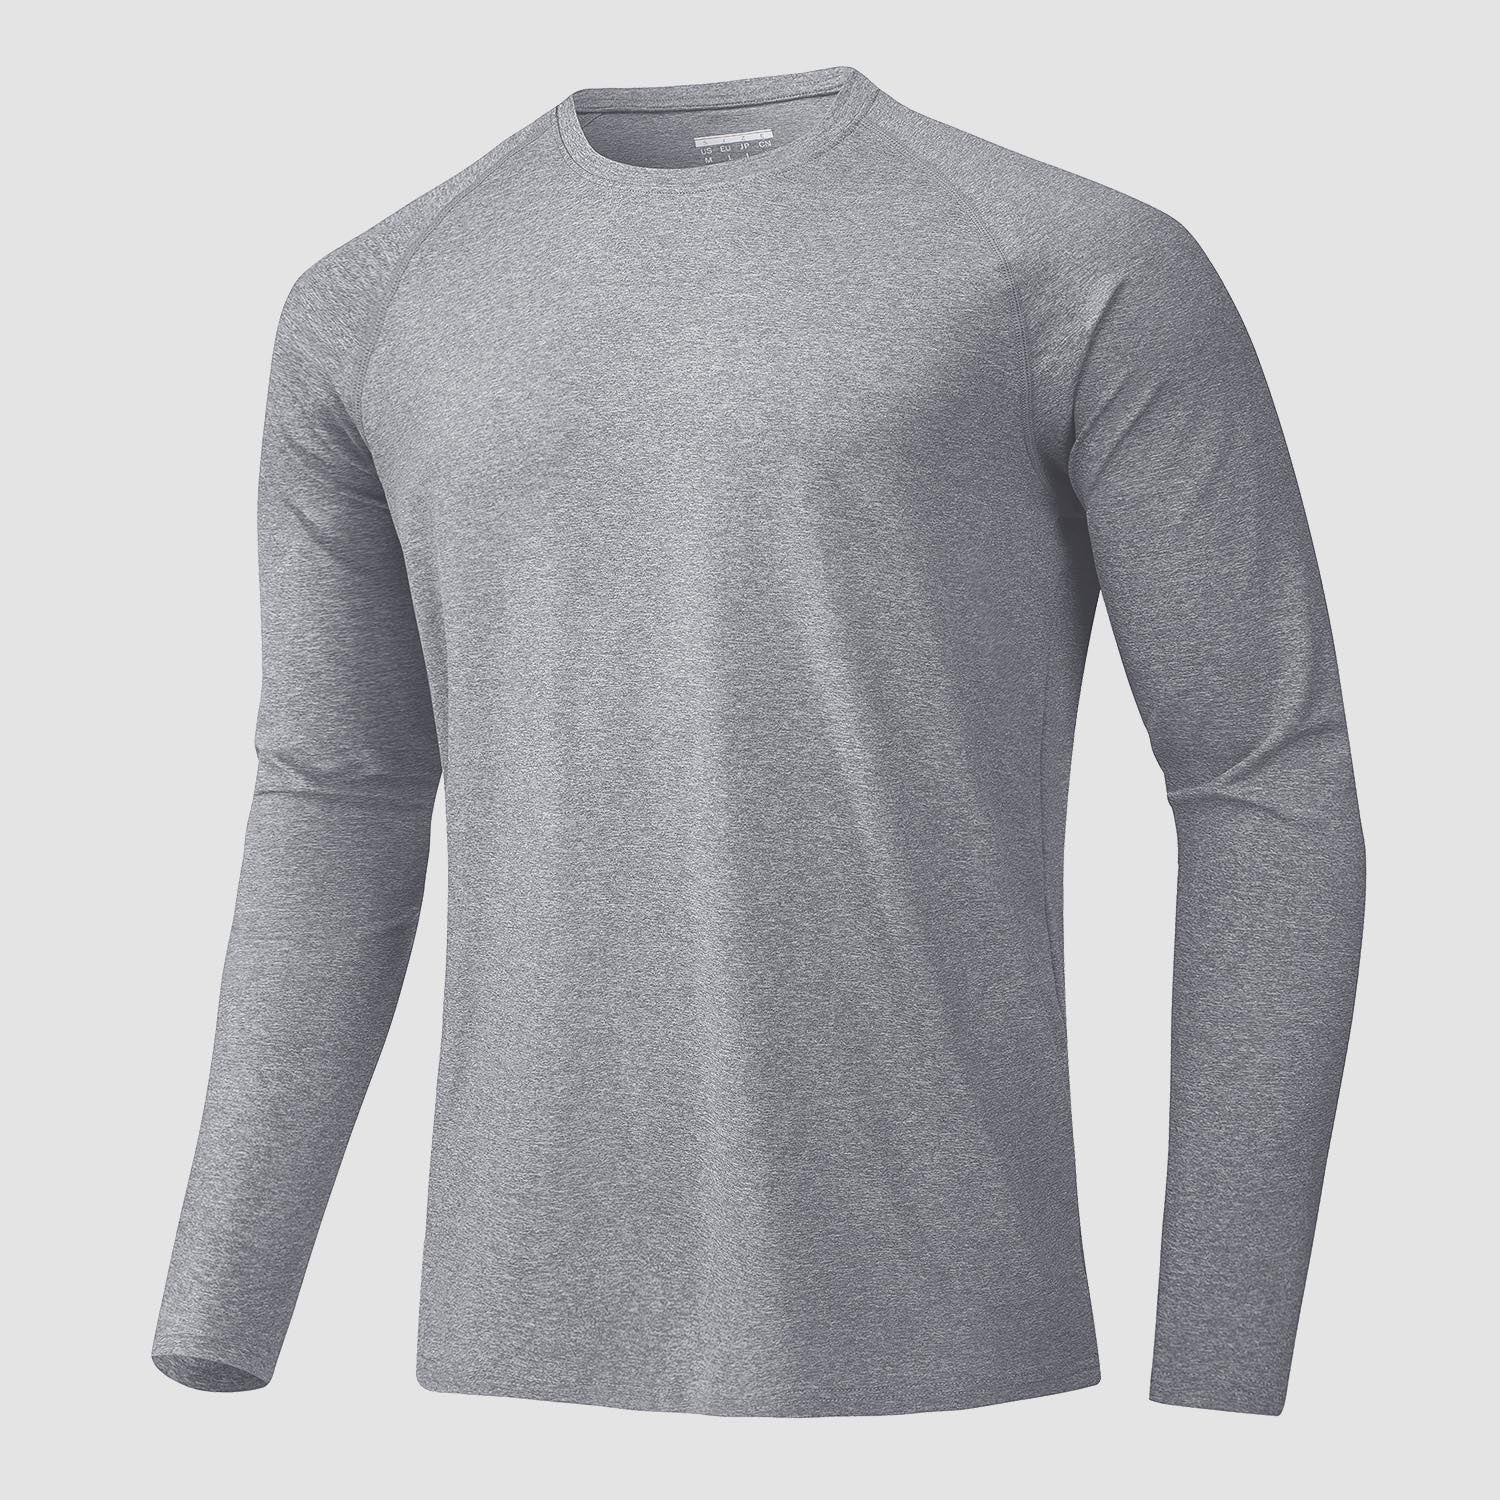 Men's Long Sleeve T-Shirt UPF 50+ Sports Tops, Dark Grey / XL